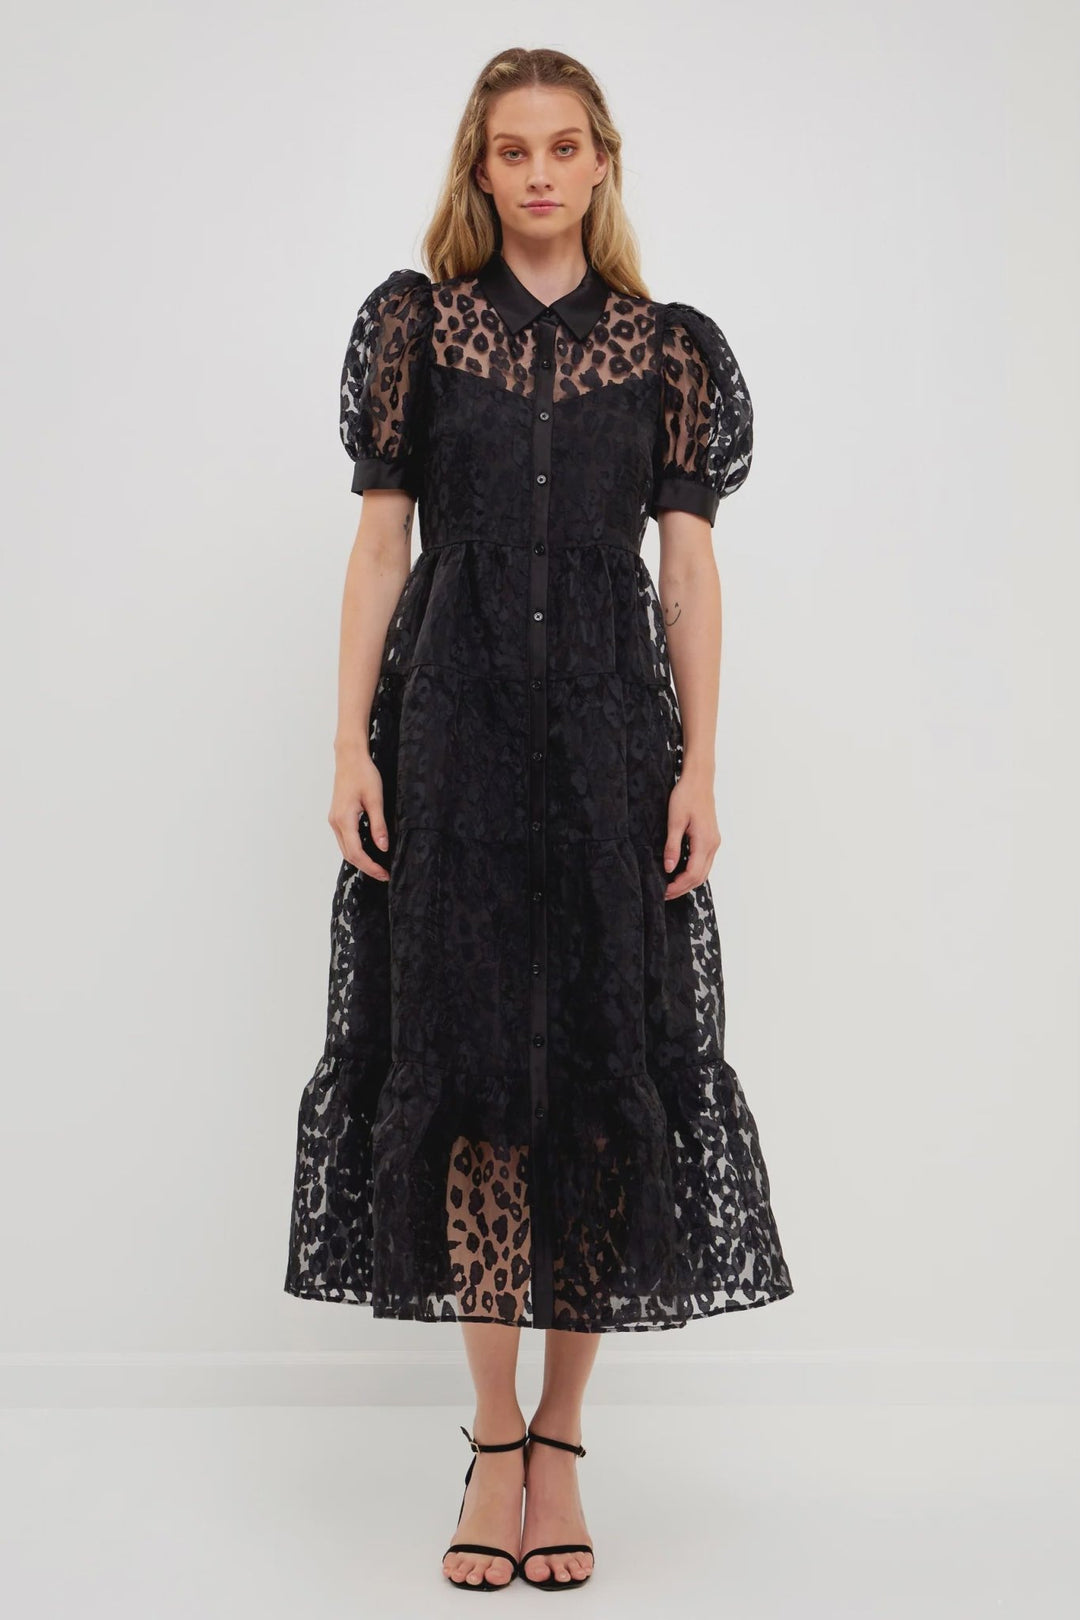 Animal Print Button Up Maxi Dress - Lush Lemon - Women's Clothing - English Factory - 11155